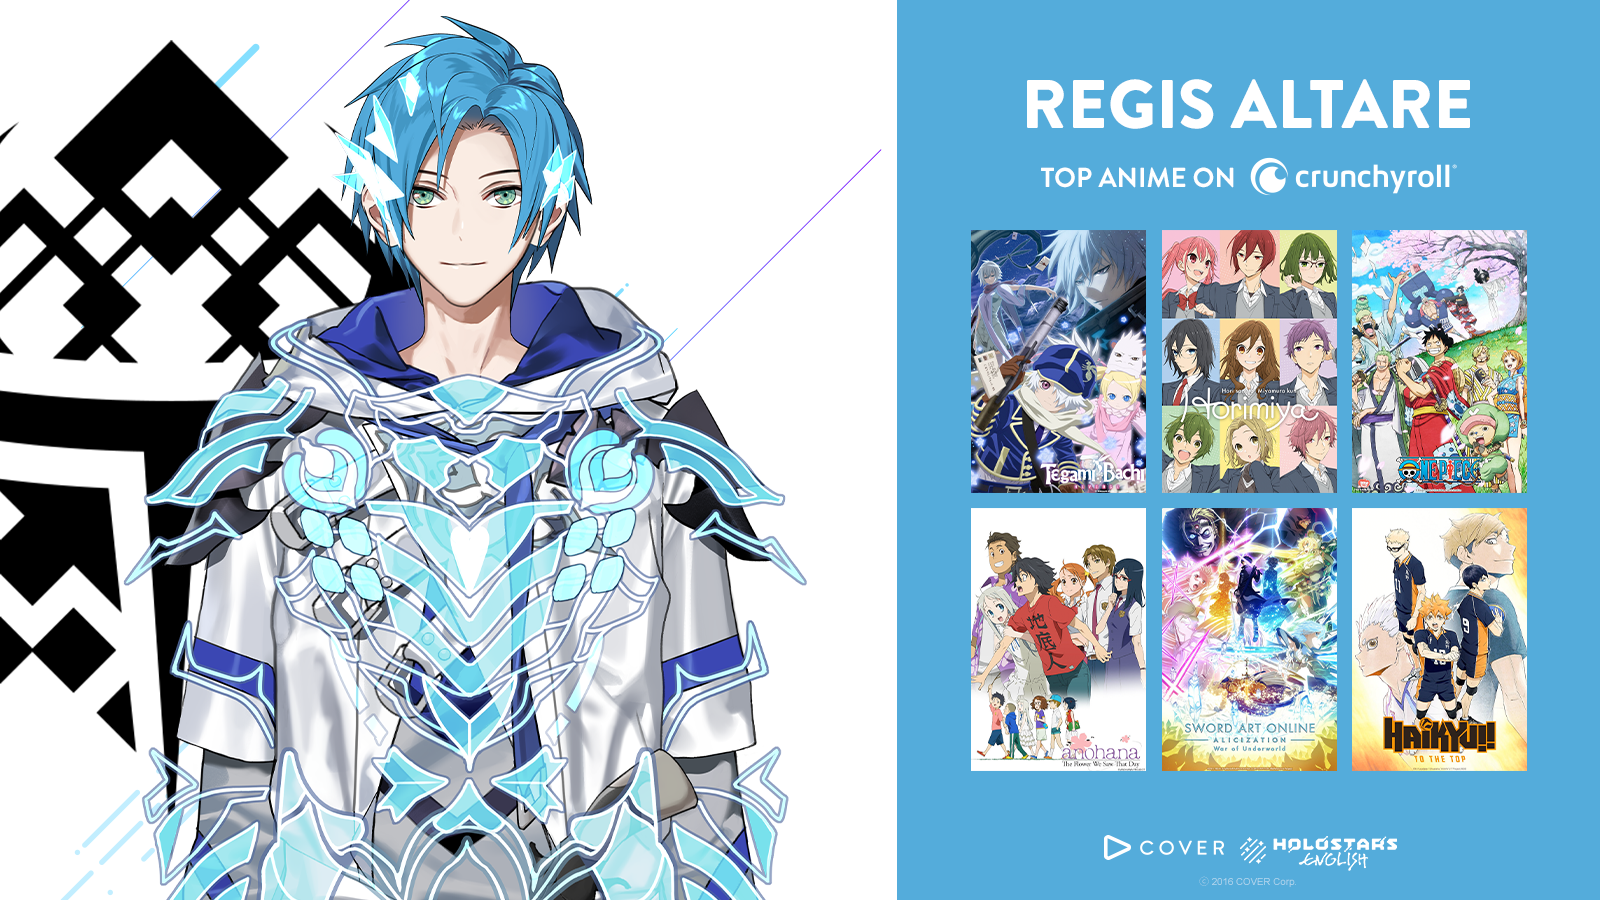 RECS: VTuber Regis Altare Shares His Top 10 Anime